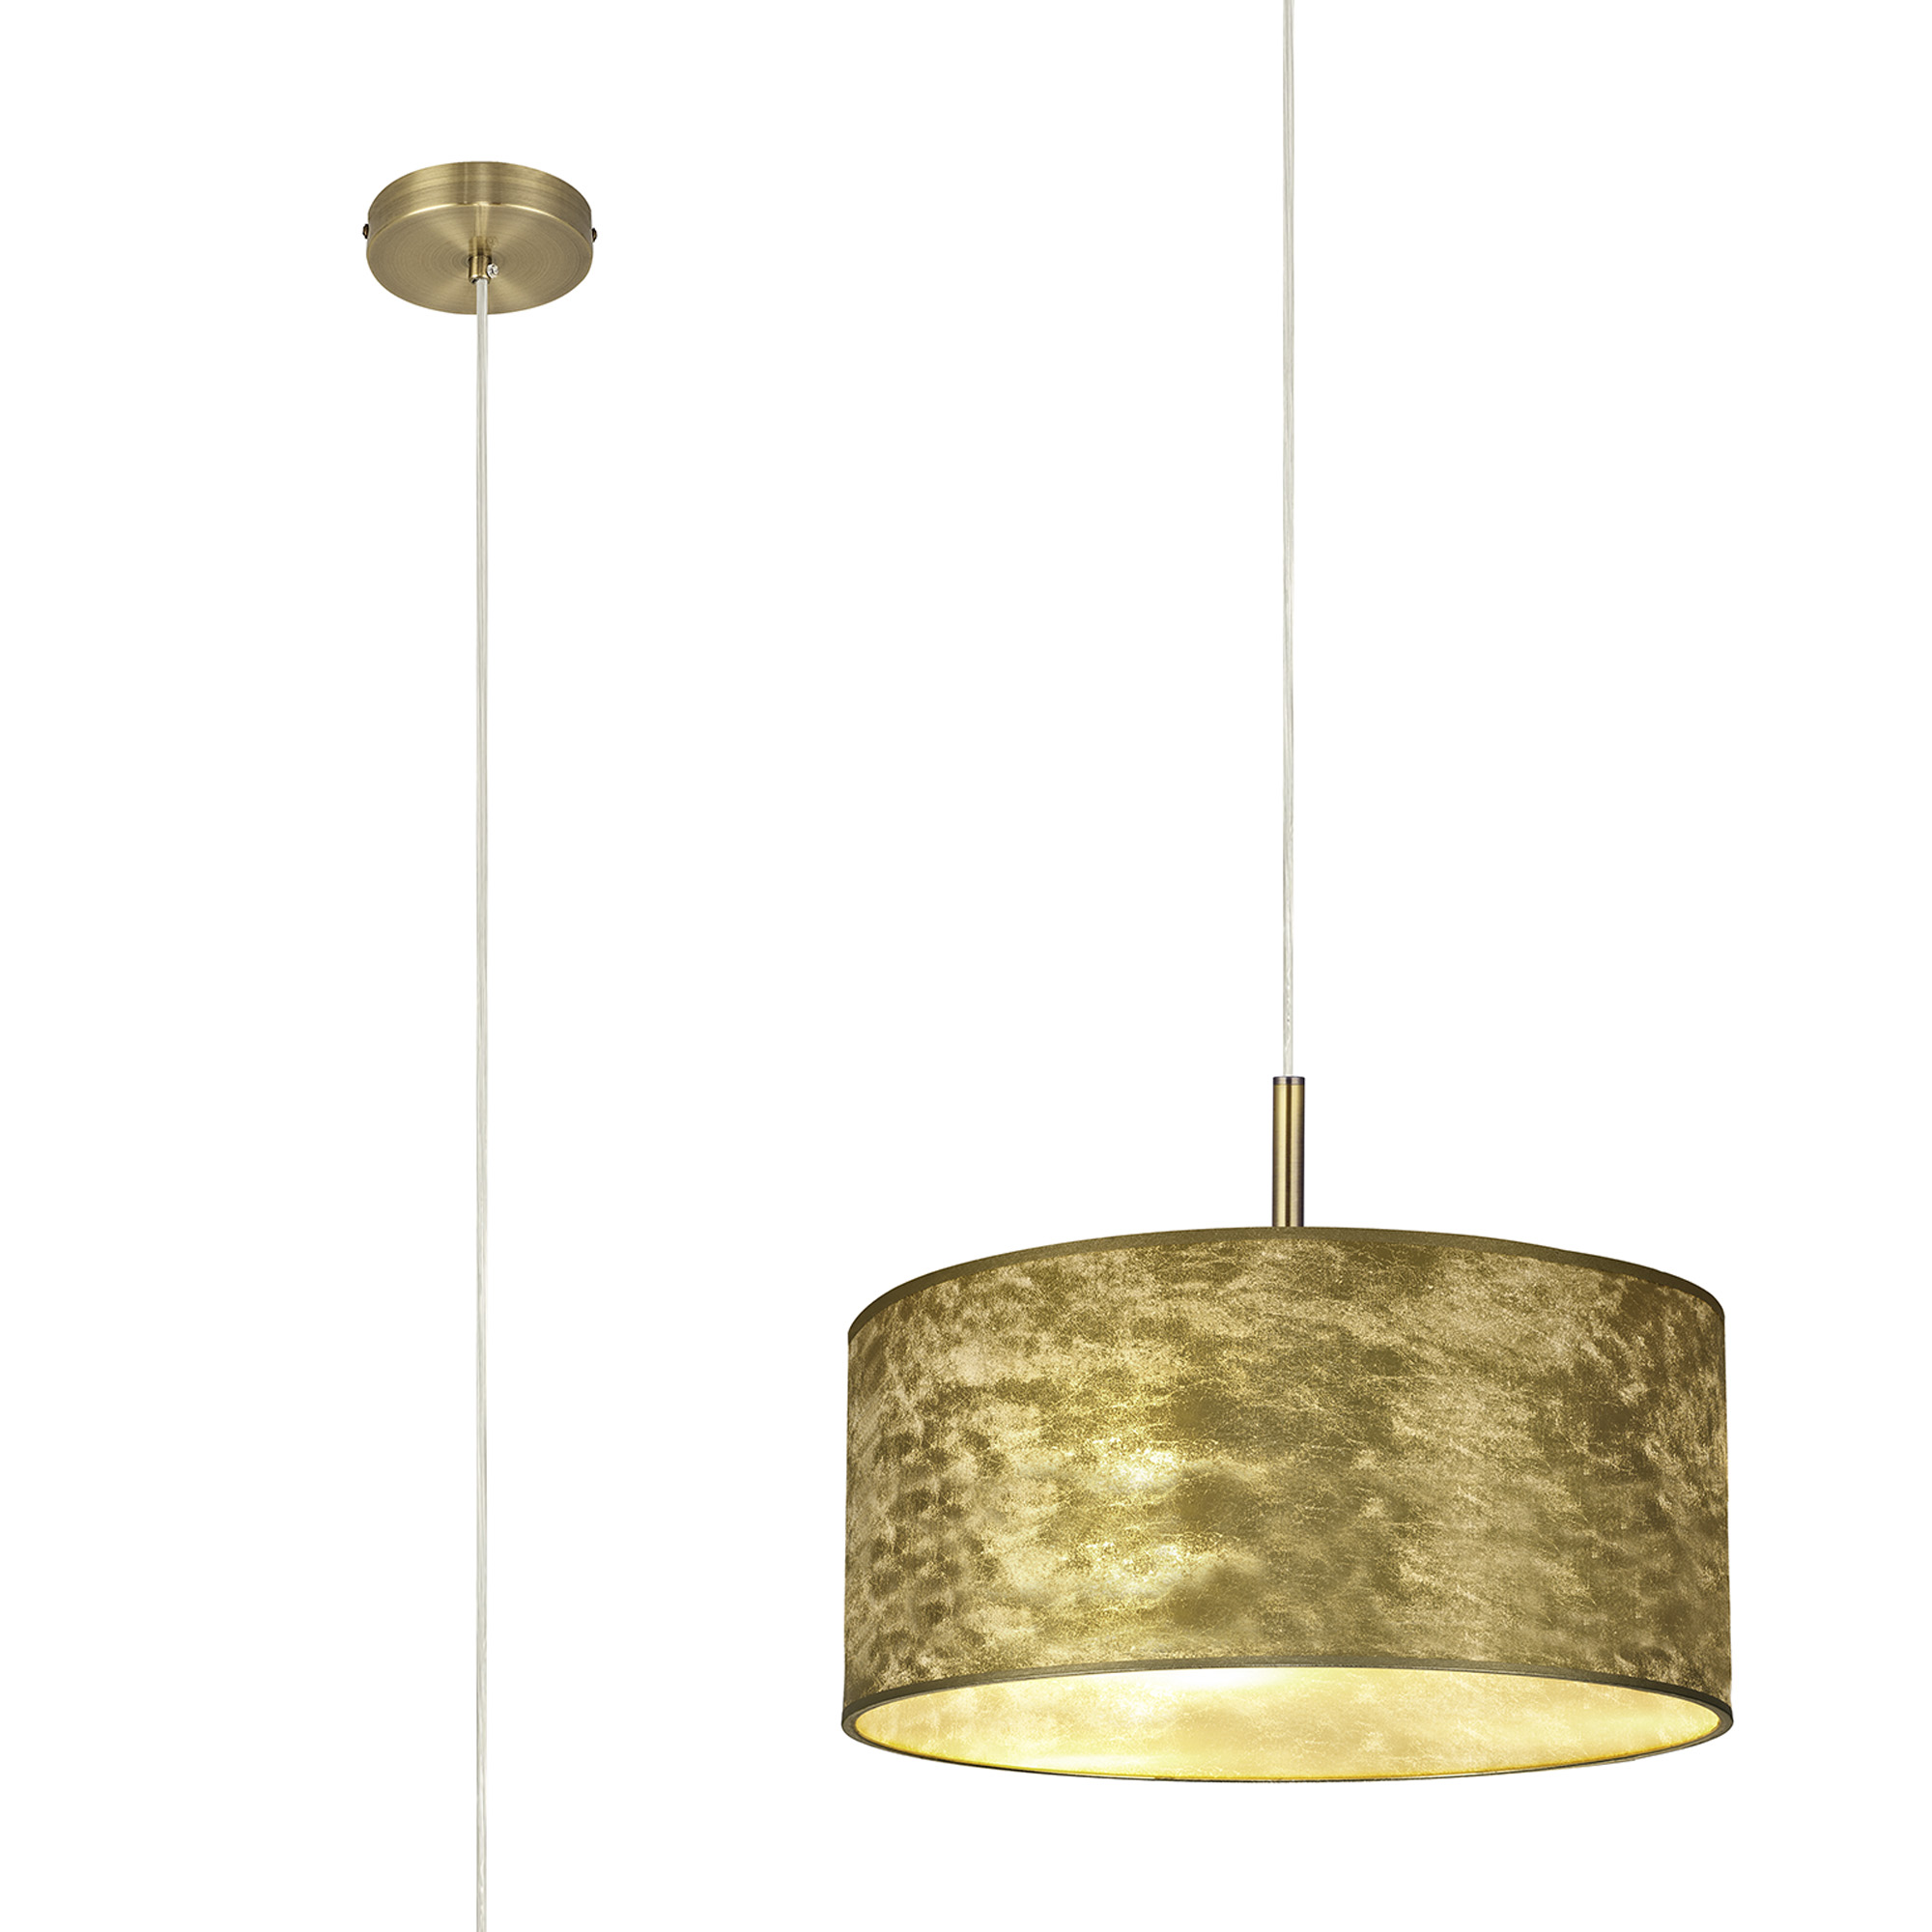 DK0827  Baymont 40cm 1 Light Pendant Antique Brass; Gold Leaf